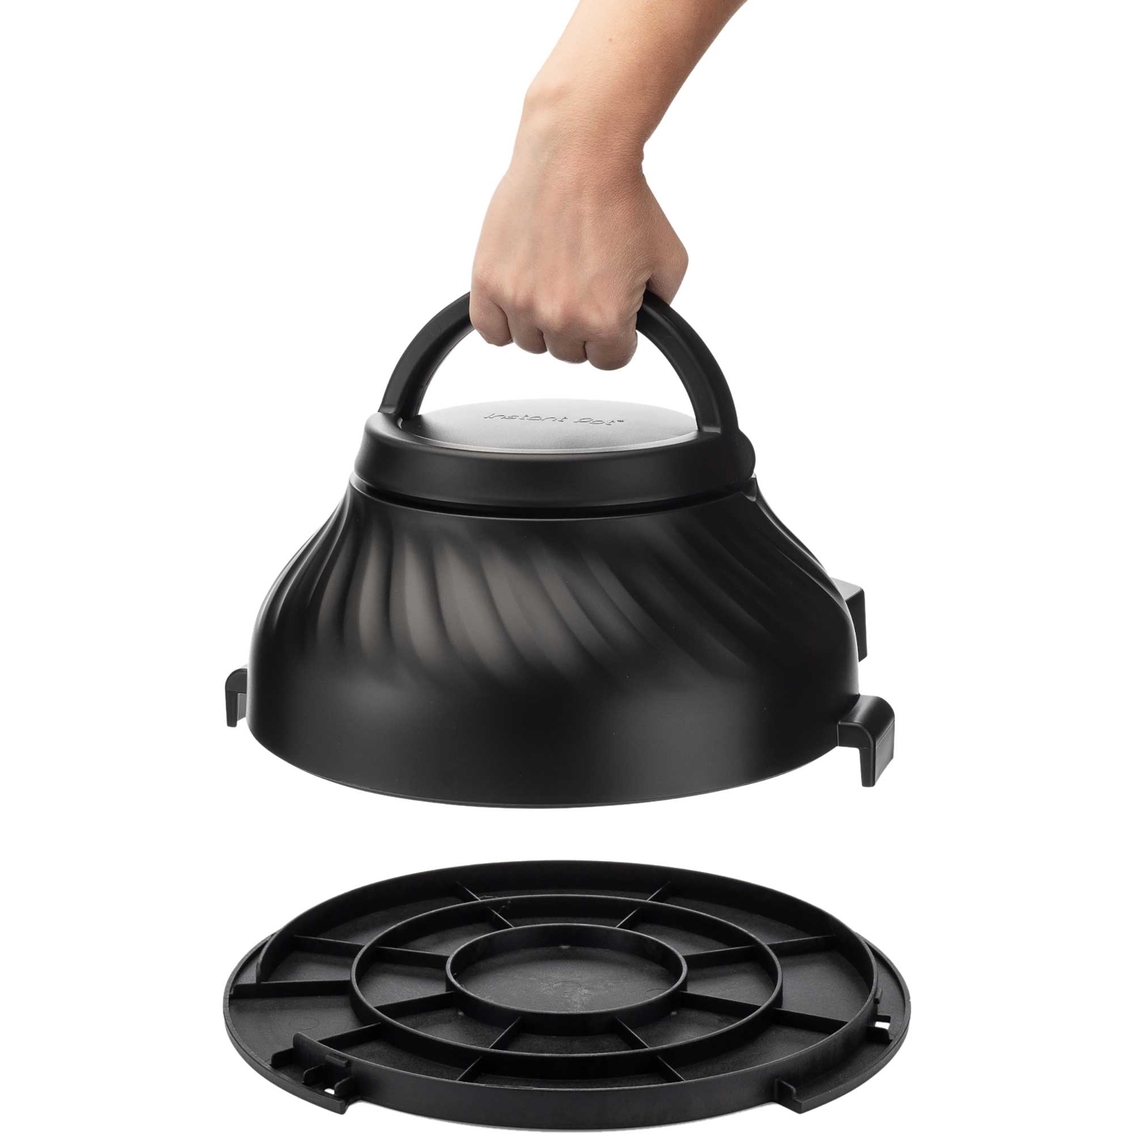 Instant Pot Duo Crisp and Air Fryer 6-quart Multi-Use Pressure Cooker &  Reviews